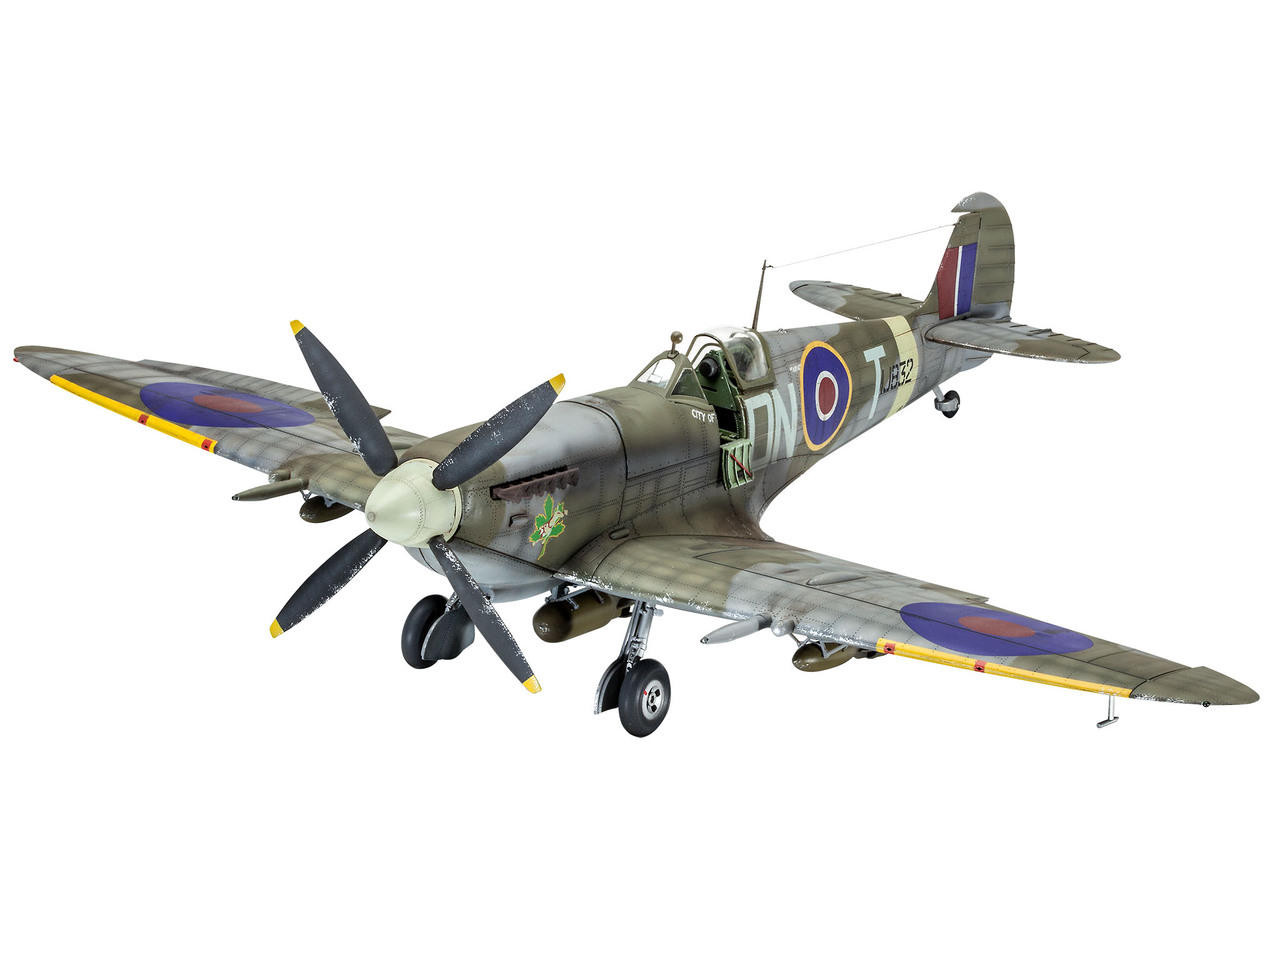 RMG3927 1/32 Revell Spitfire MkIxc Plastic Model Kit MMD Squadron